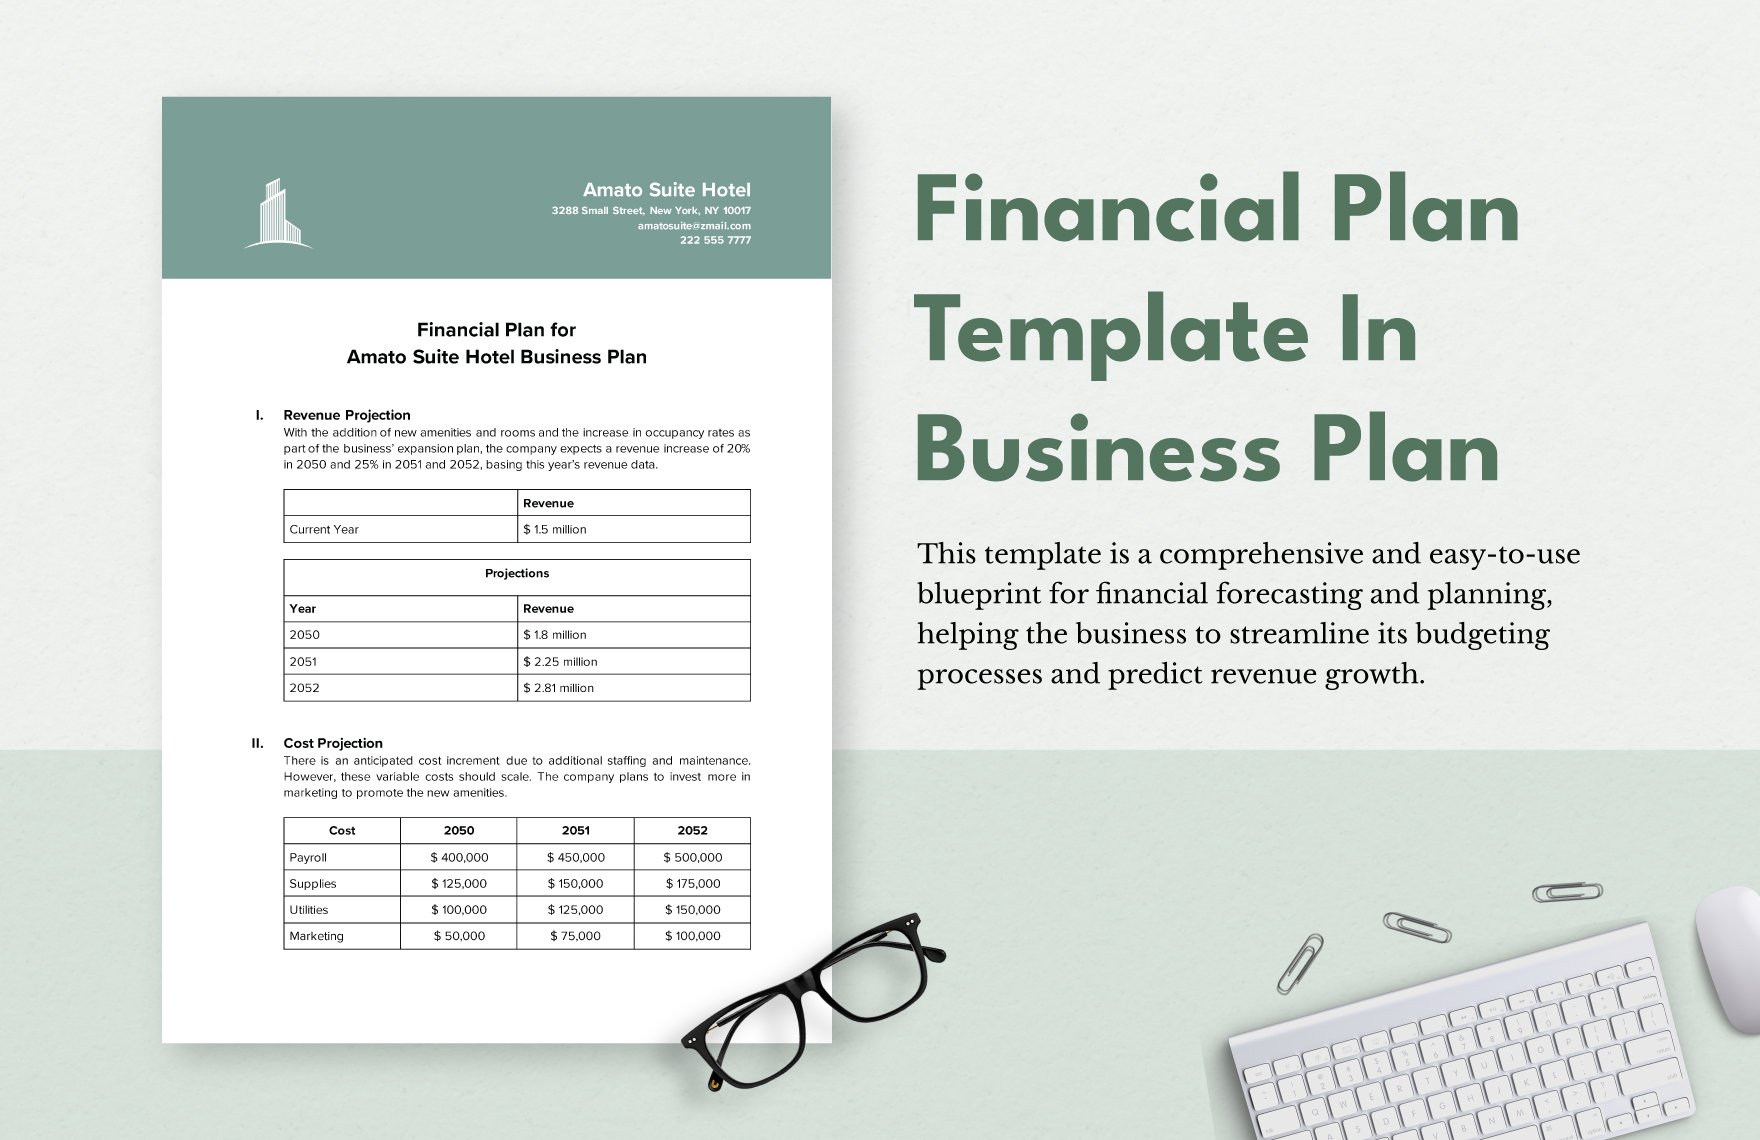 Financial Plan Template In Business Plan